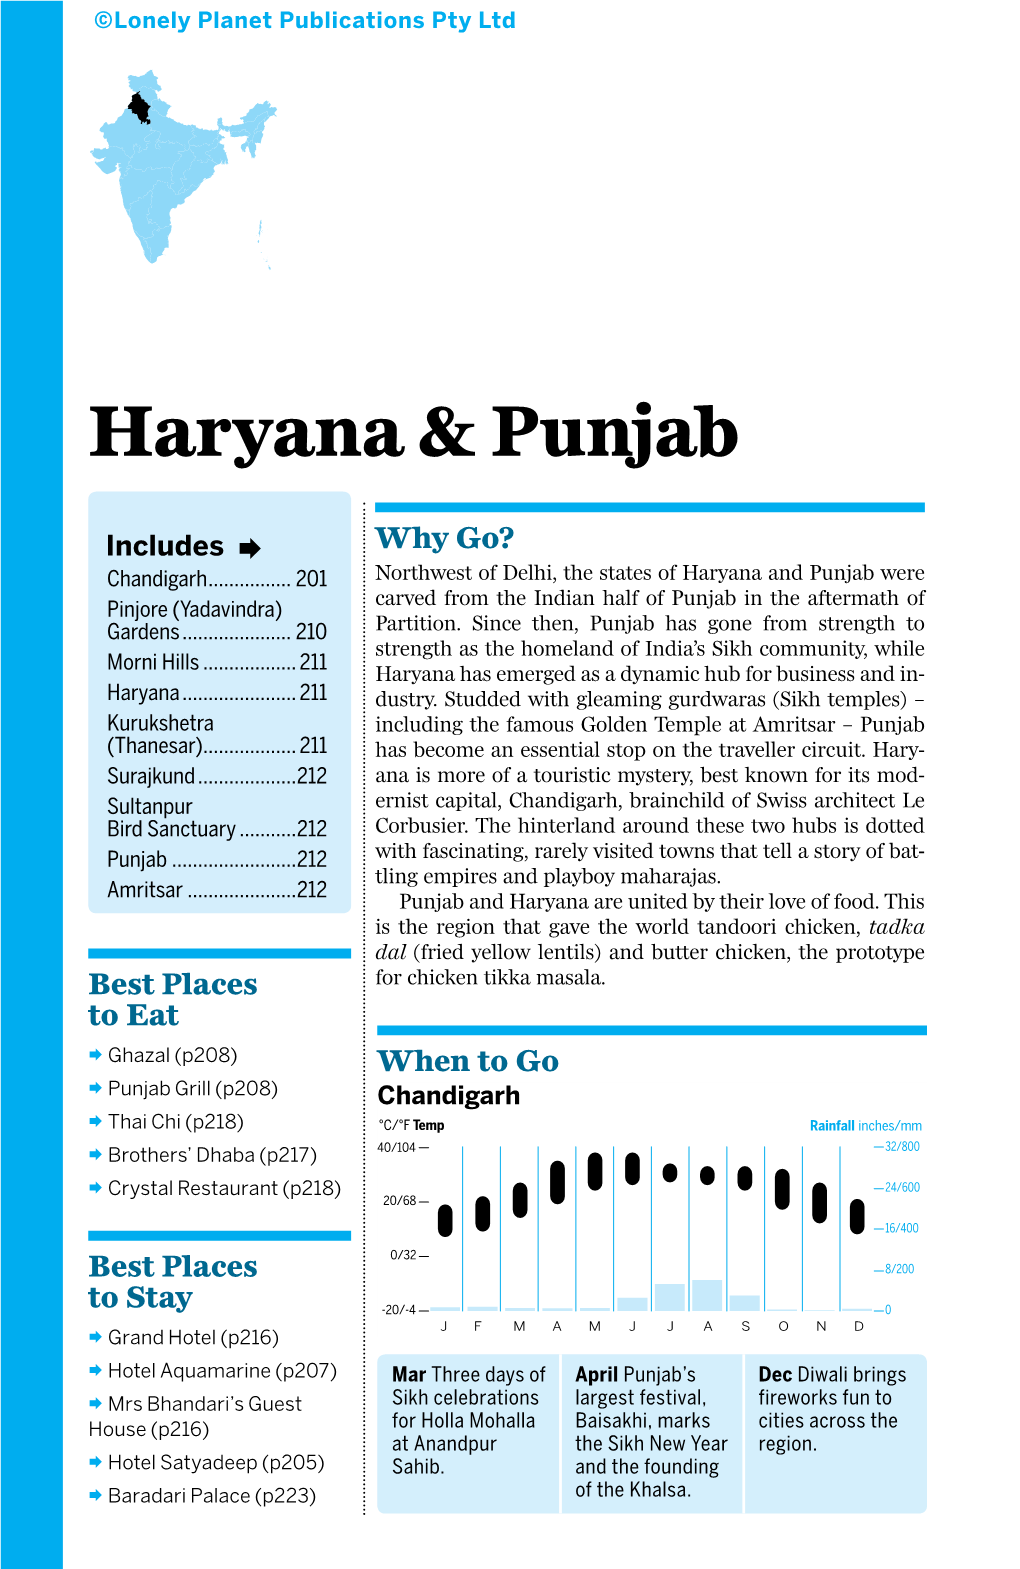 Haryana & Punjab